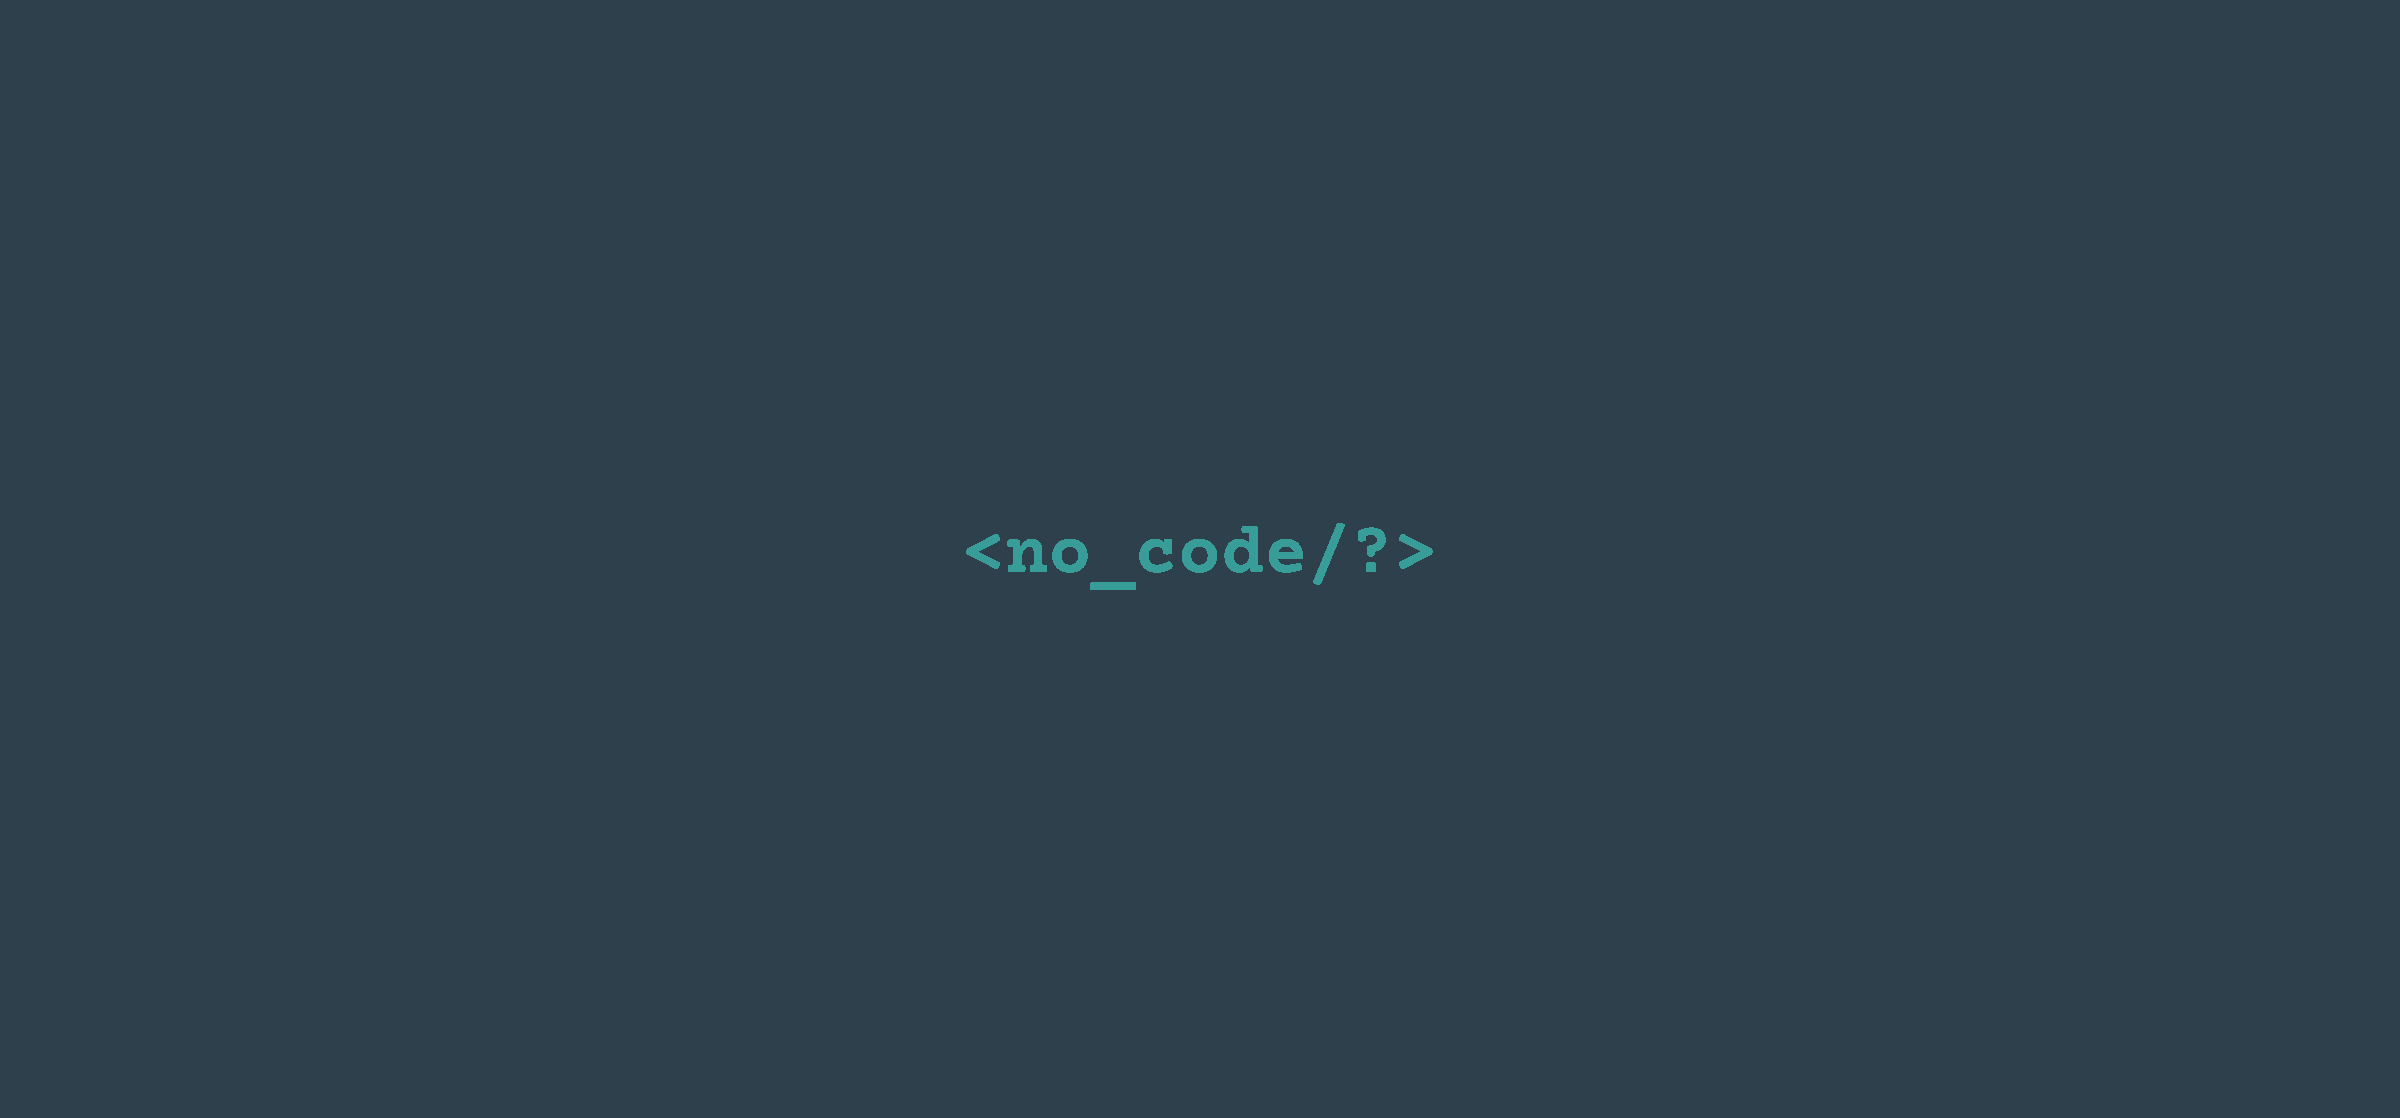 A code line, representing no code development